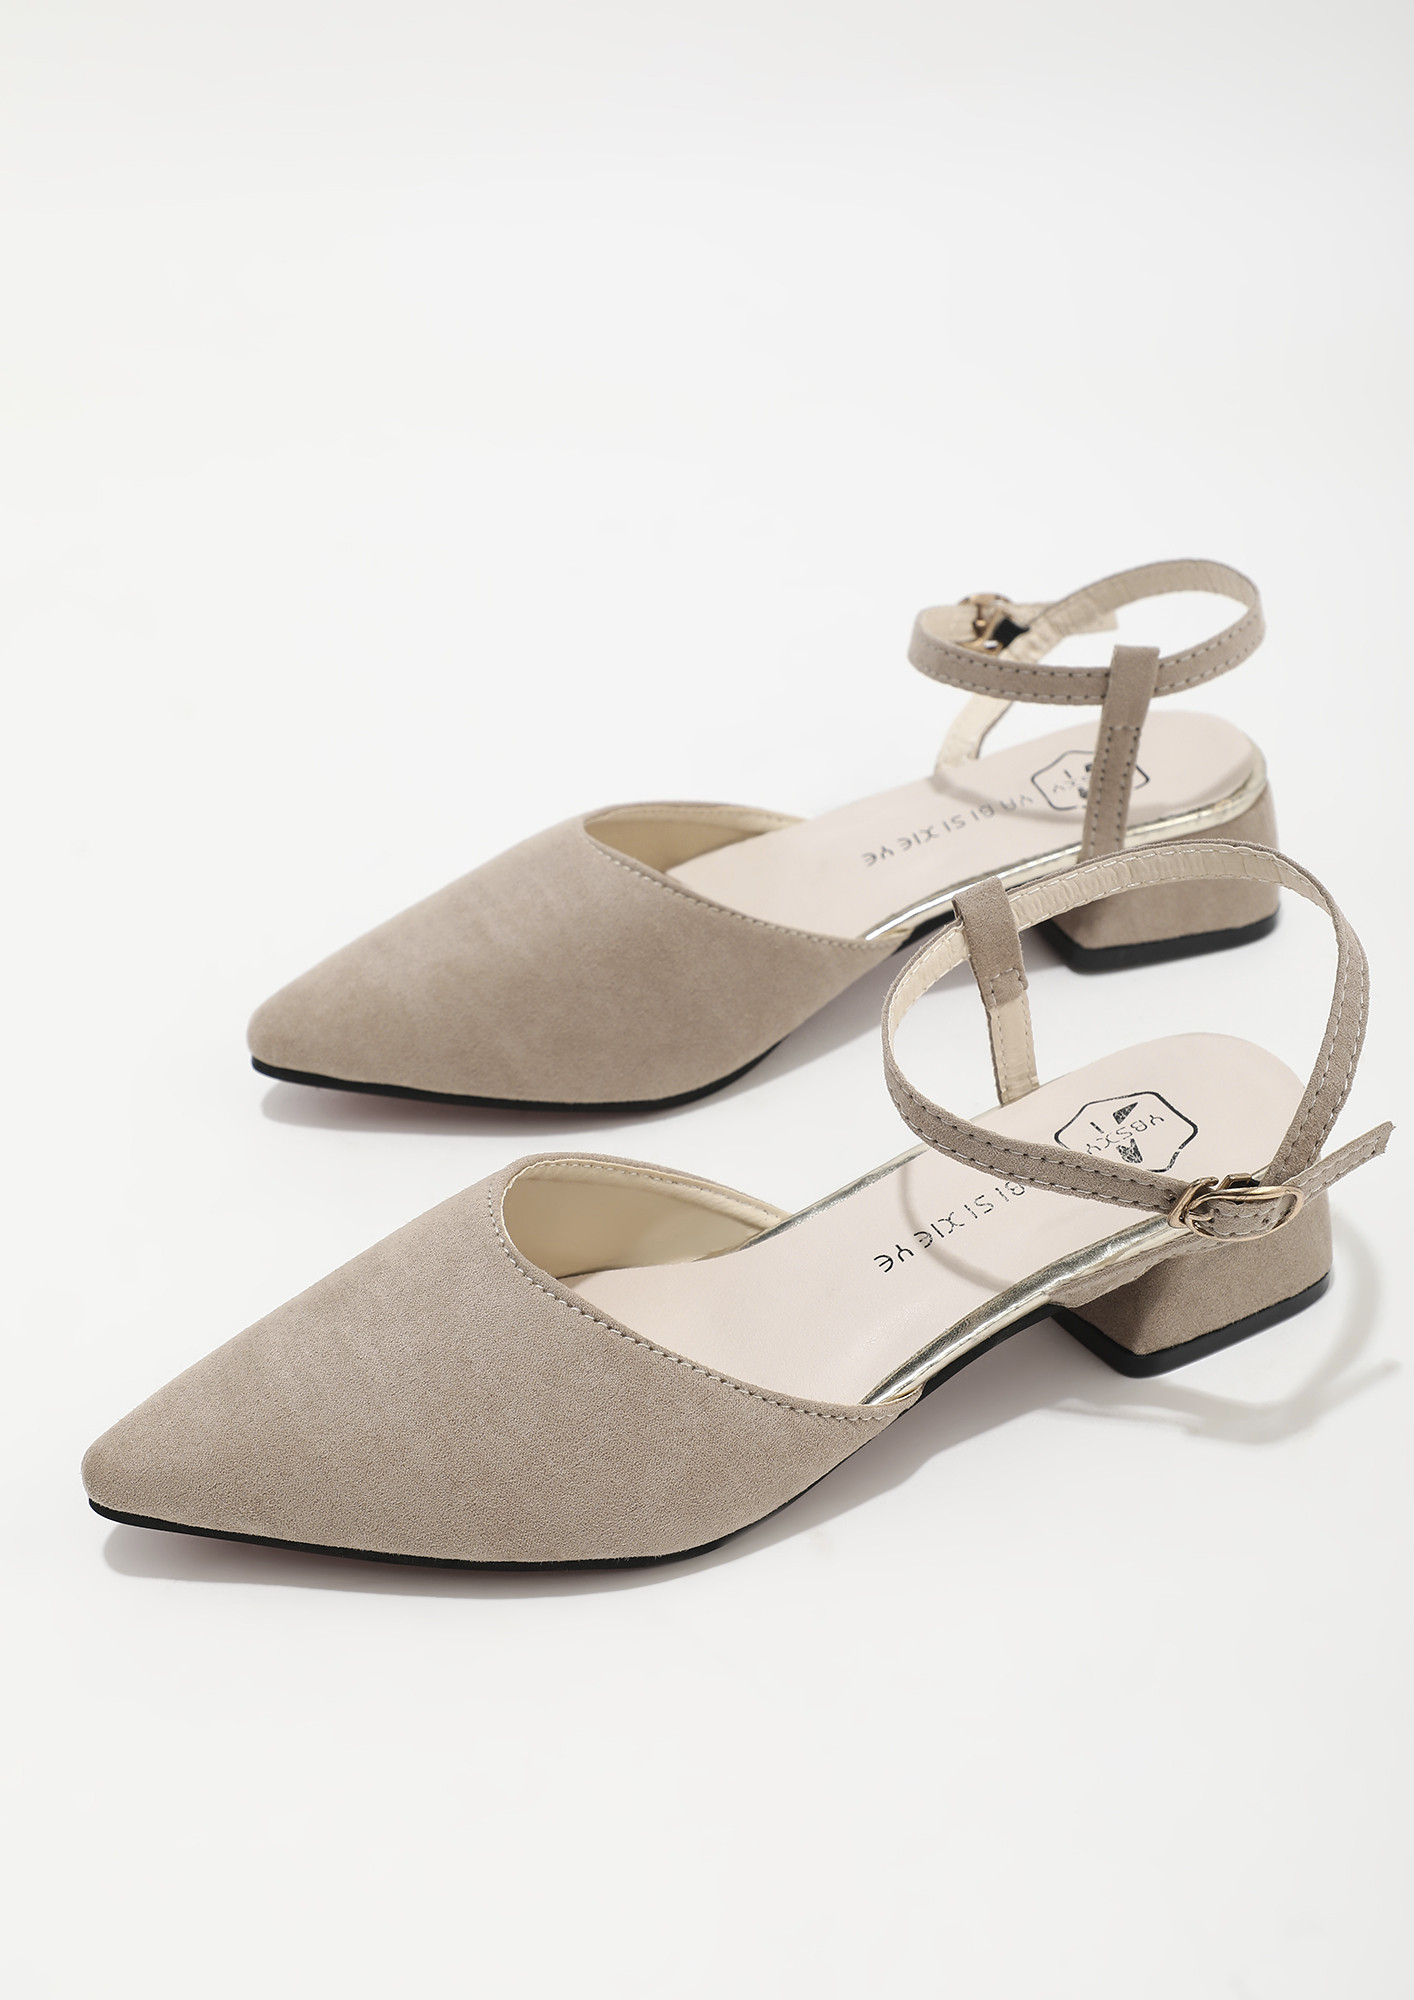 Girls Sandals - Buy Sandals for Girls Online | Mochi Shoes-hkpdtq2012.edu.vn